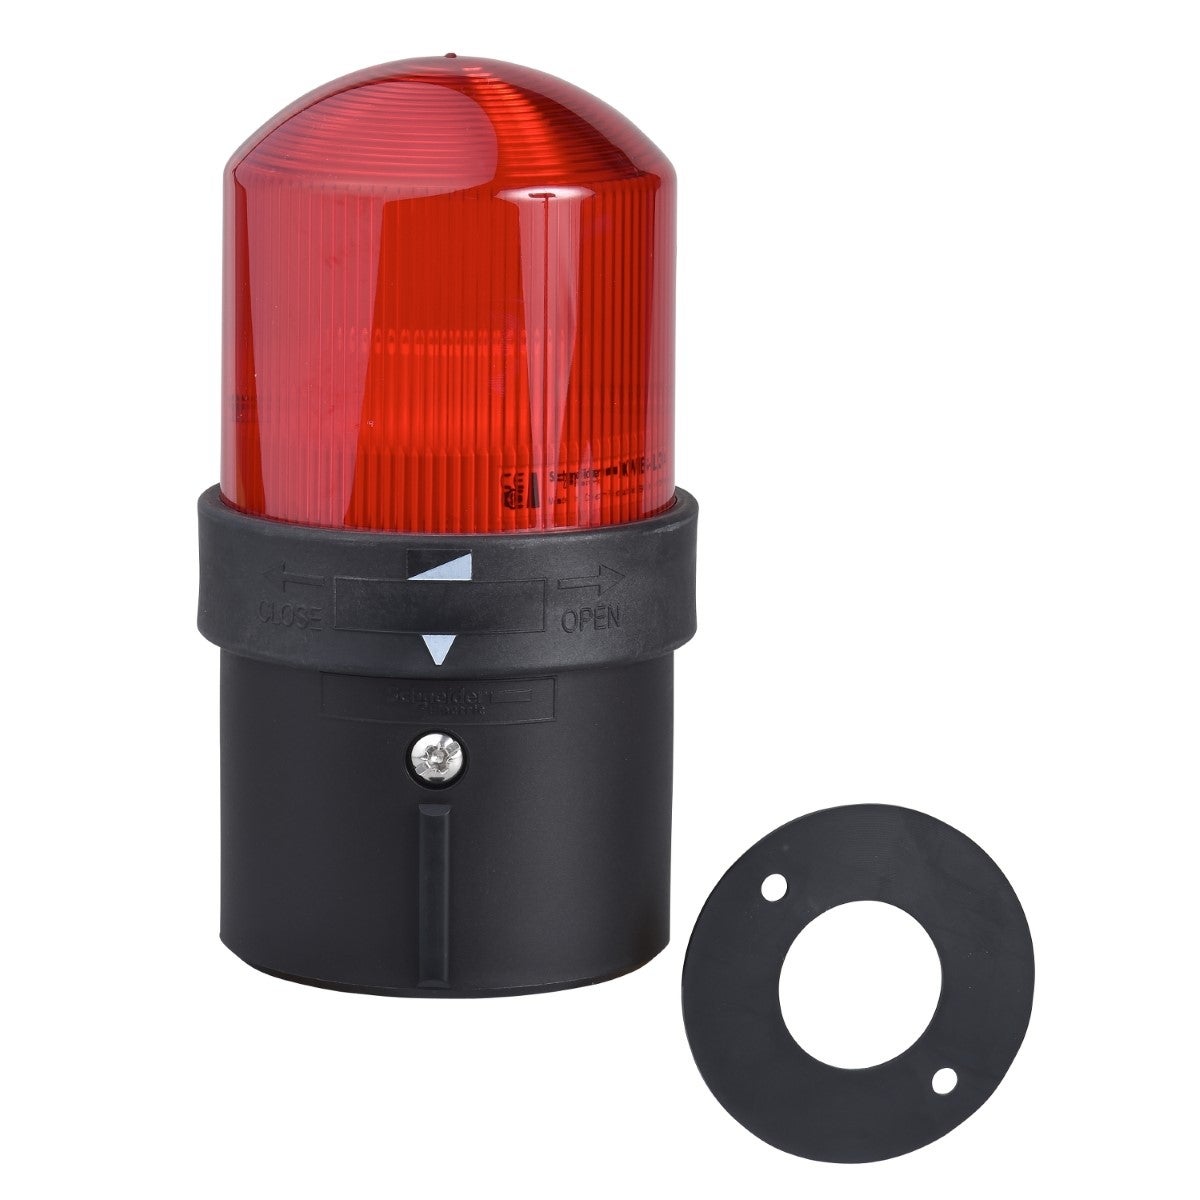 illuminated unit for modular tower lights, Harmony XVB, plastic, red, 70mm, steady, integral LED, 230V AC